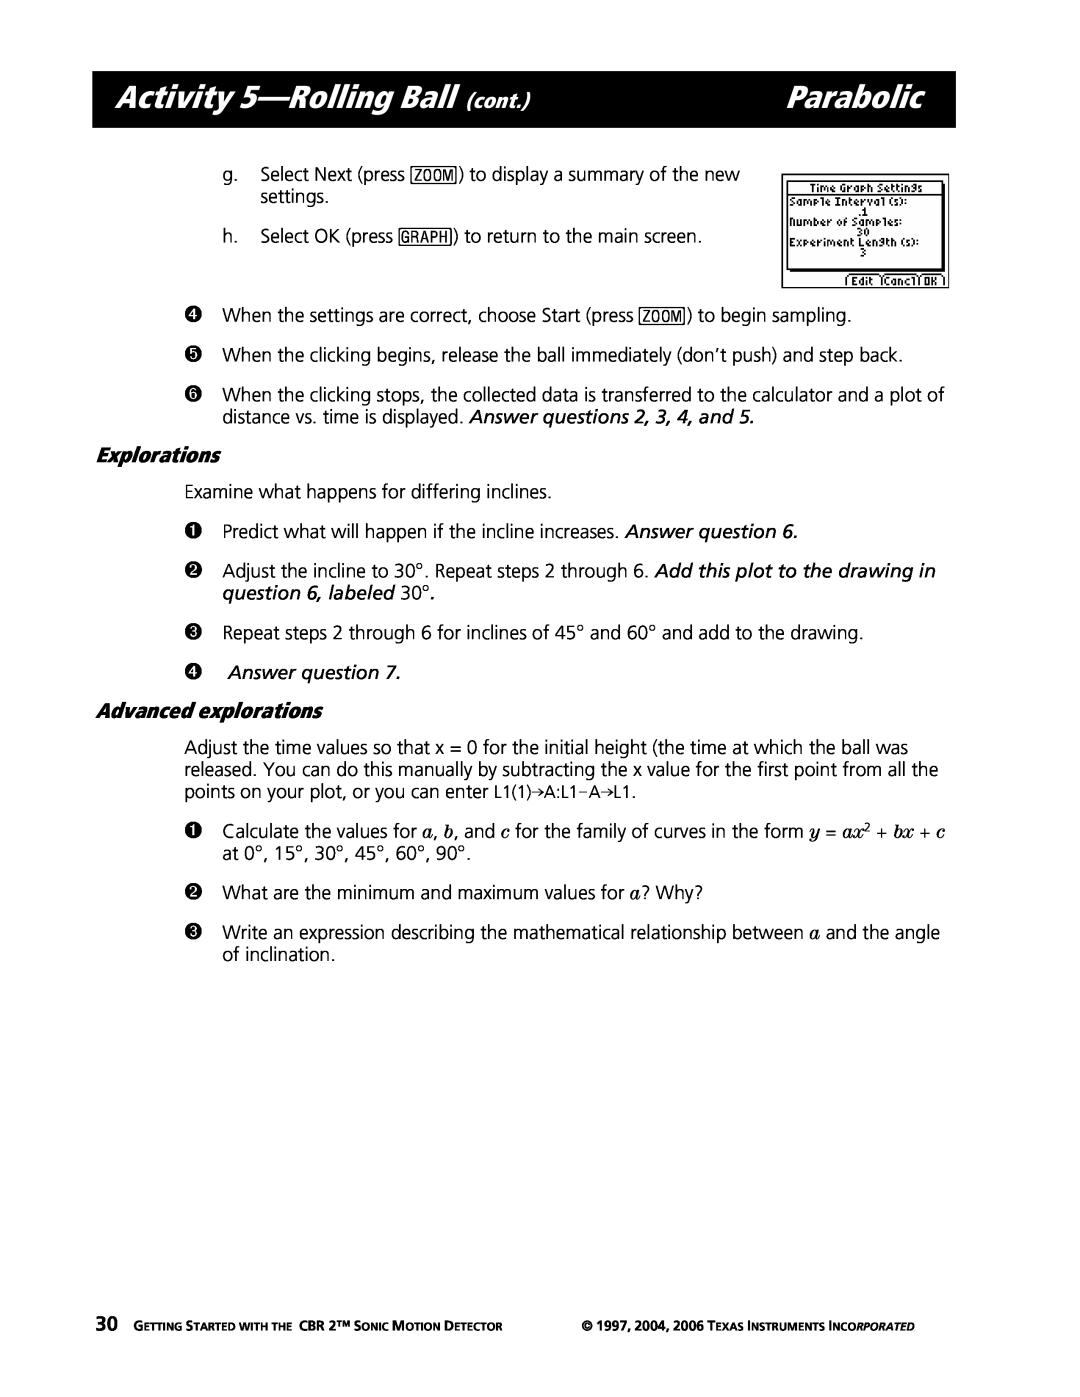 Texas Instruments CBR 2 manual Activity 5-RollingBall cont, Parabolic, ÍAnswer question 